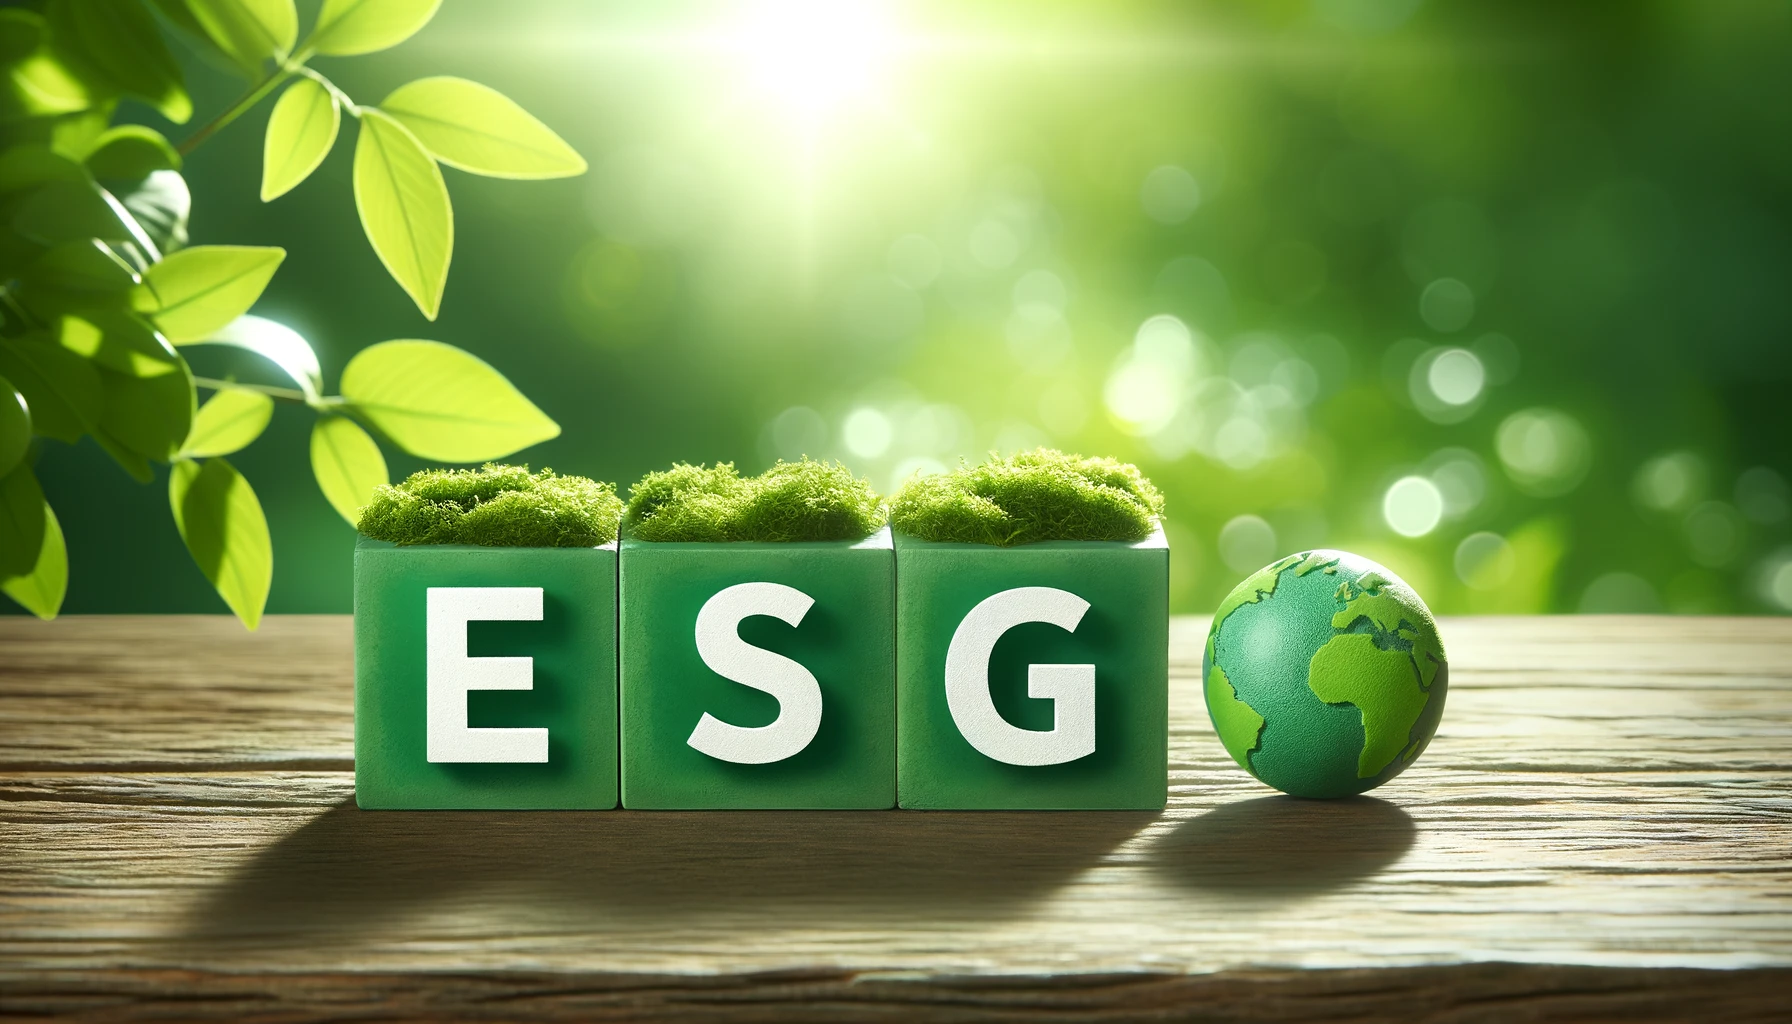 ESG-Environmental-Social-Governance